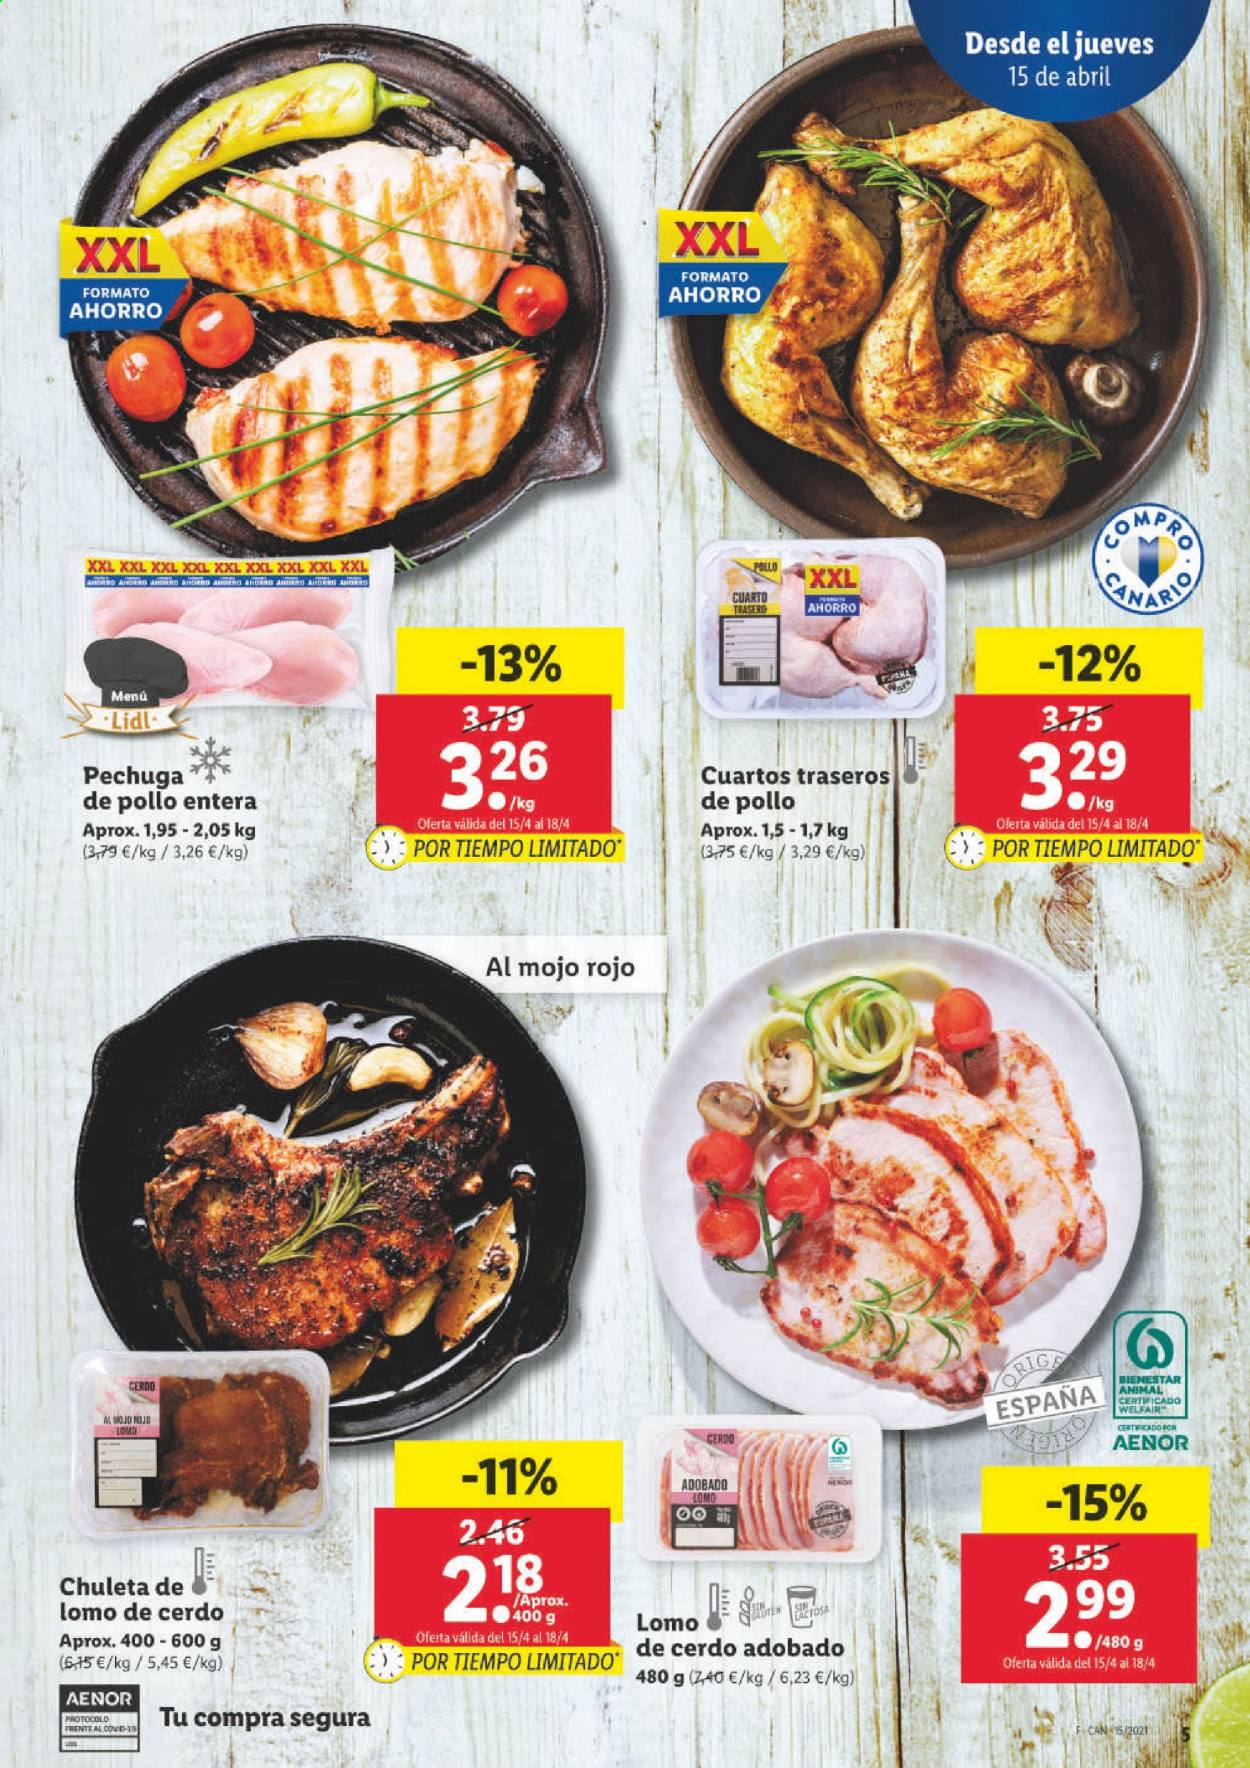 thumbnail - Folleto actual Lidl - 15/04/21 - 21/04/21 - Ventas - chuleta, lomo de cerdo, pechuga de pollo, pollo. Página 7.